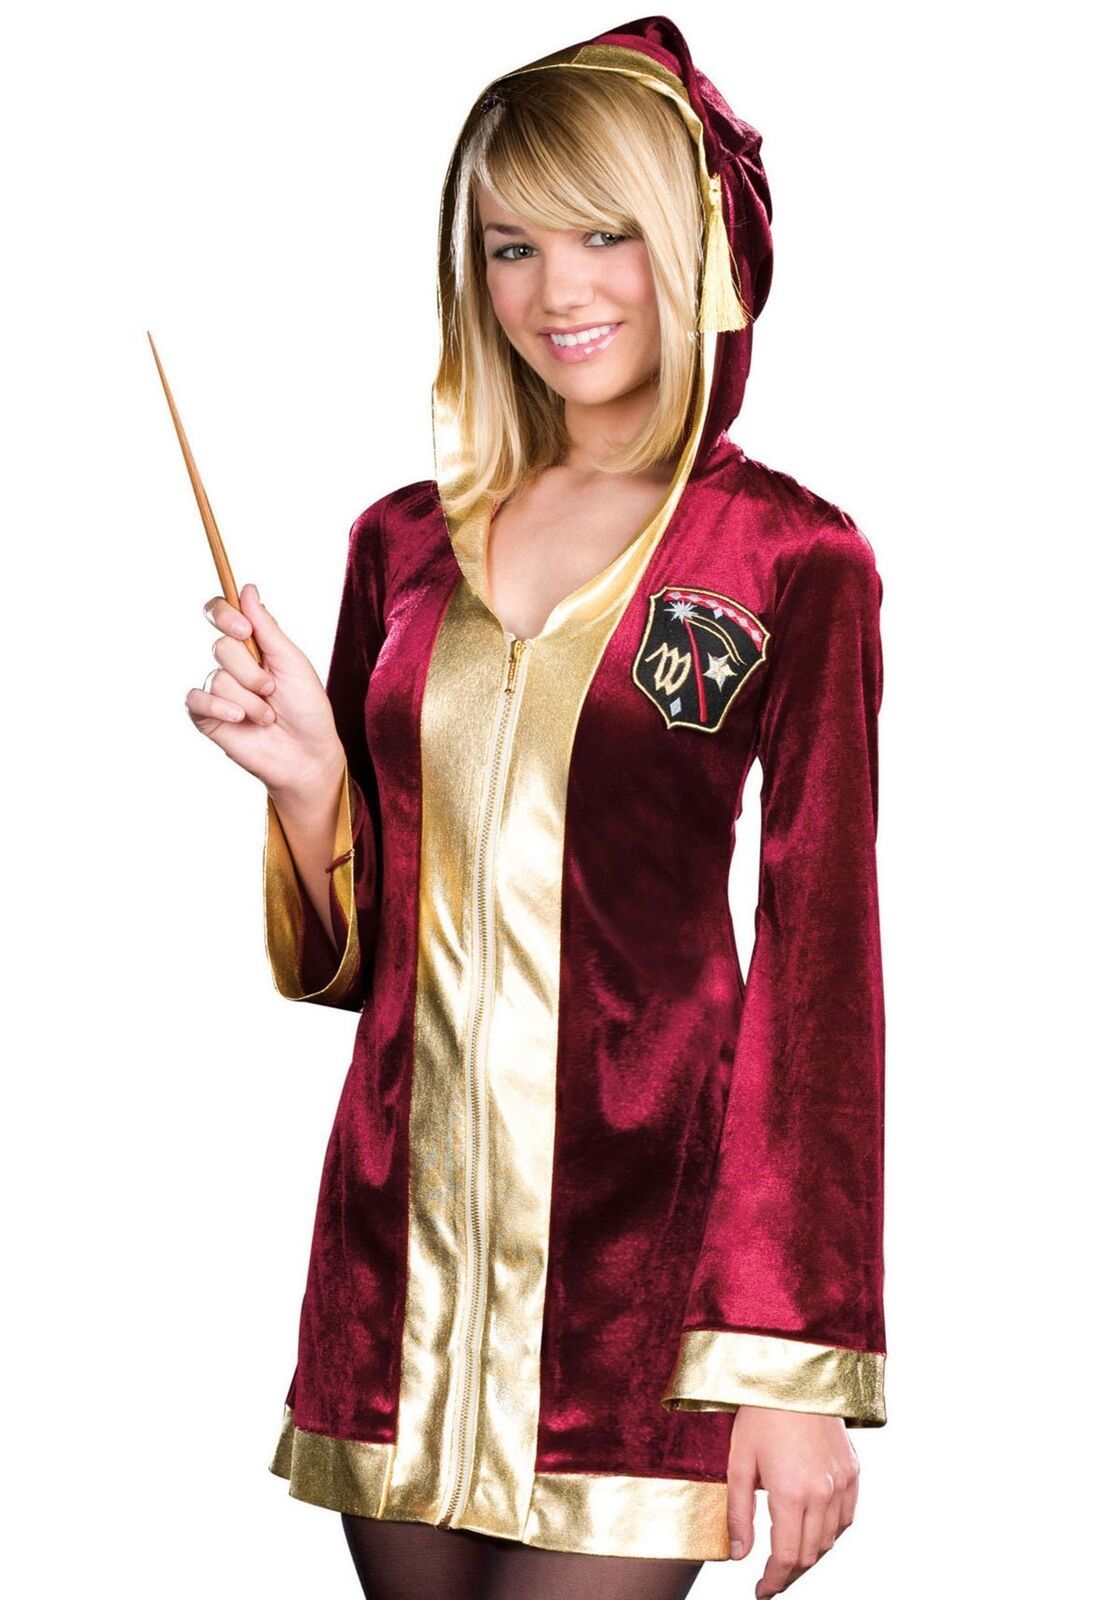 Primary image for Wizardly Delights Junior Costume - Teen Medium - Sugar Sugar by Dreamgirl